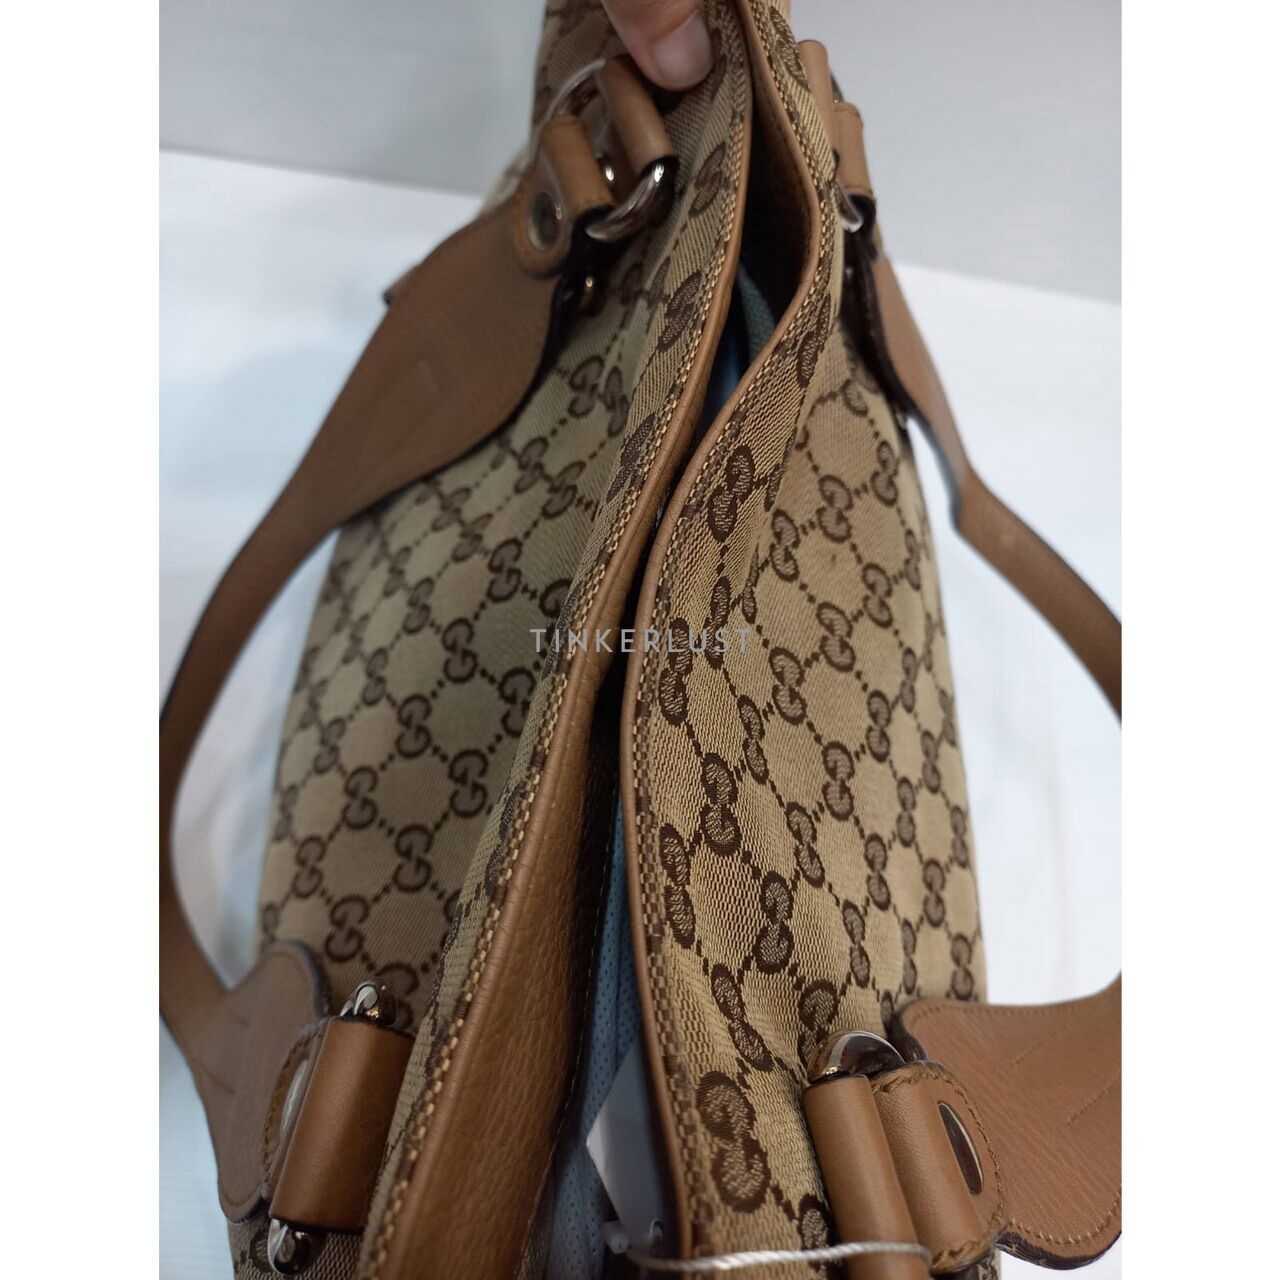 Gucci GG Icon Bit Canvas Leather Beige Tote Bag 